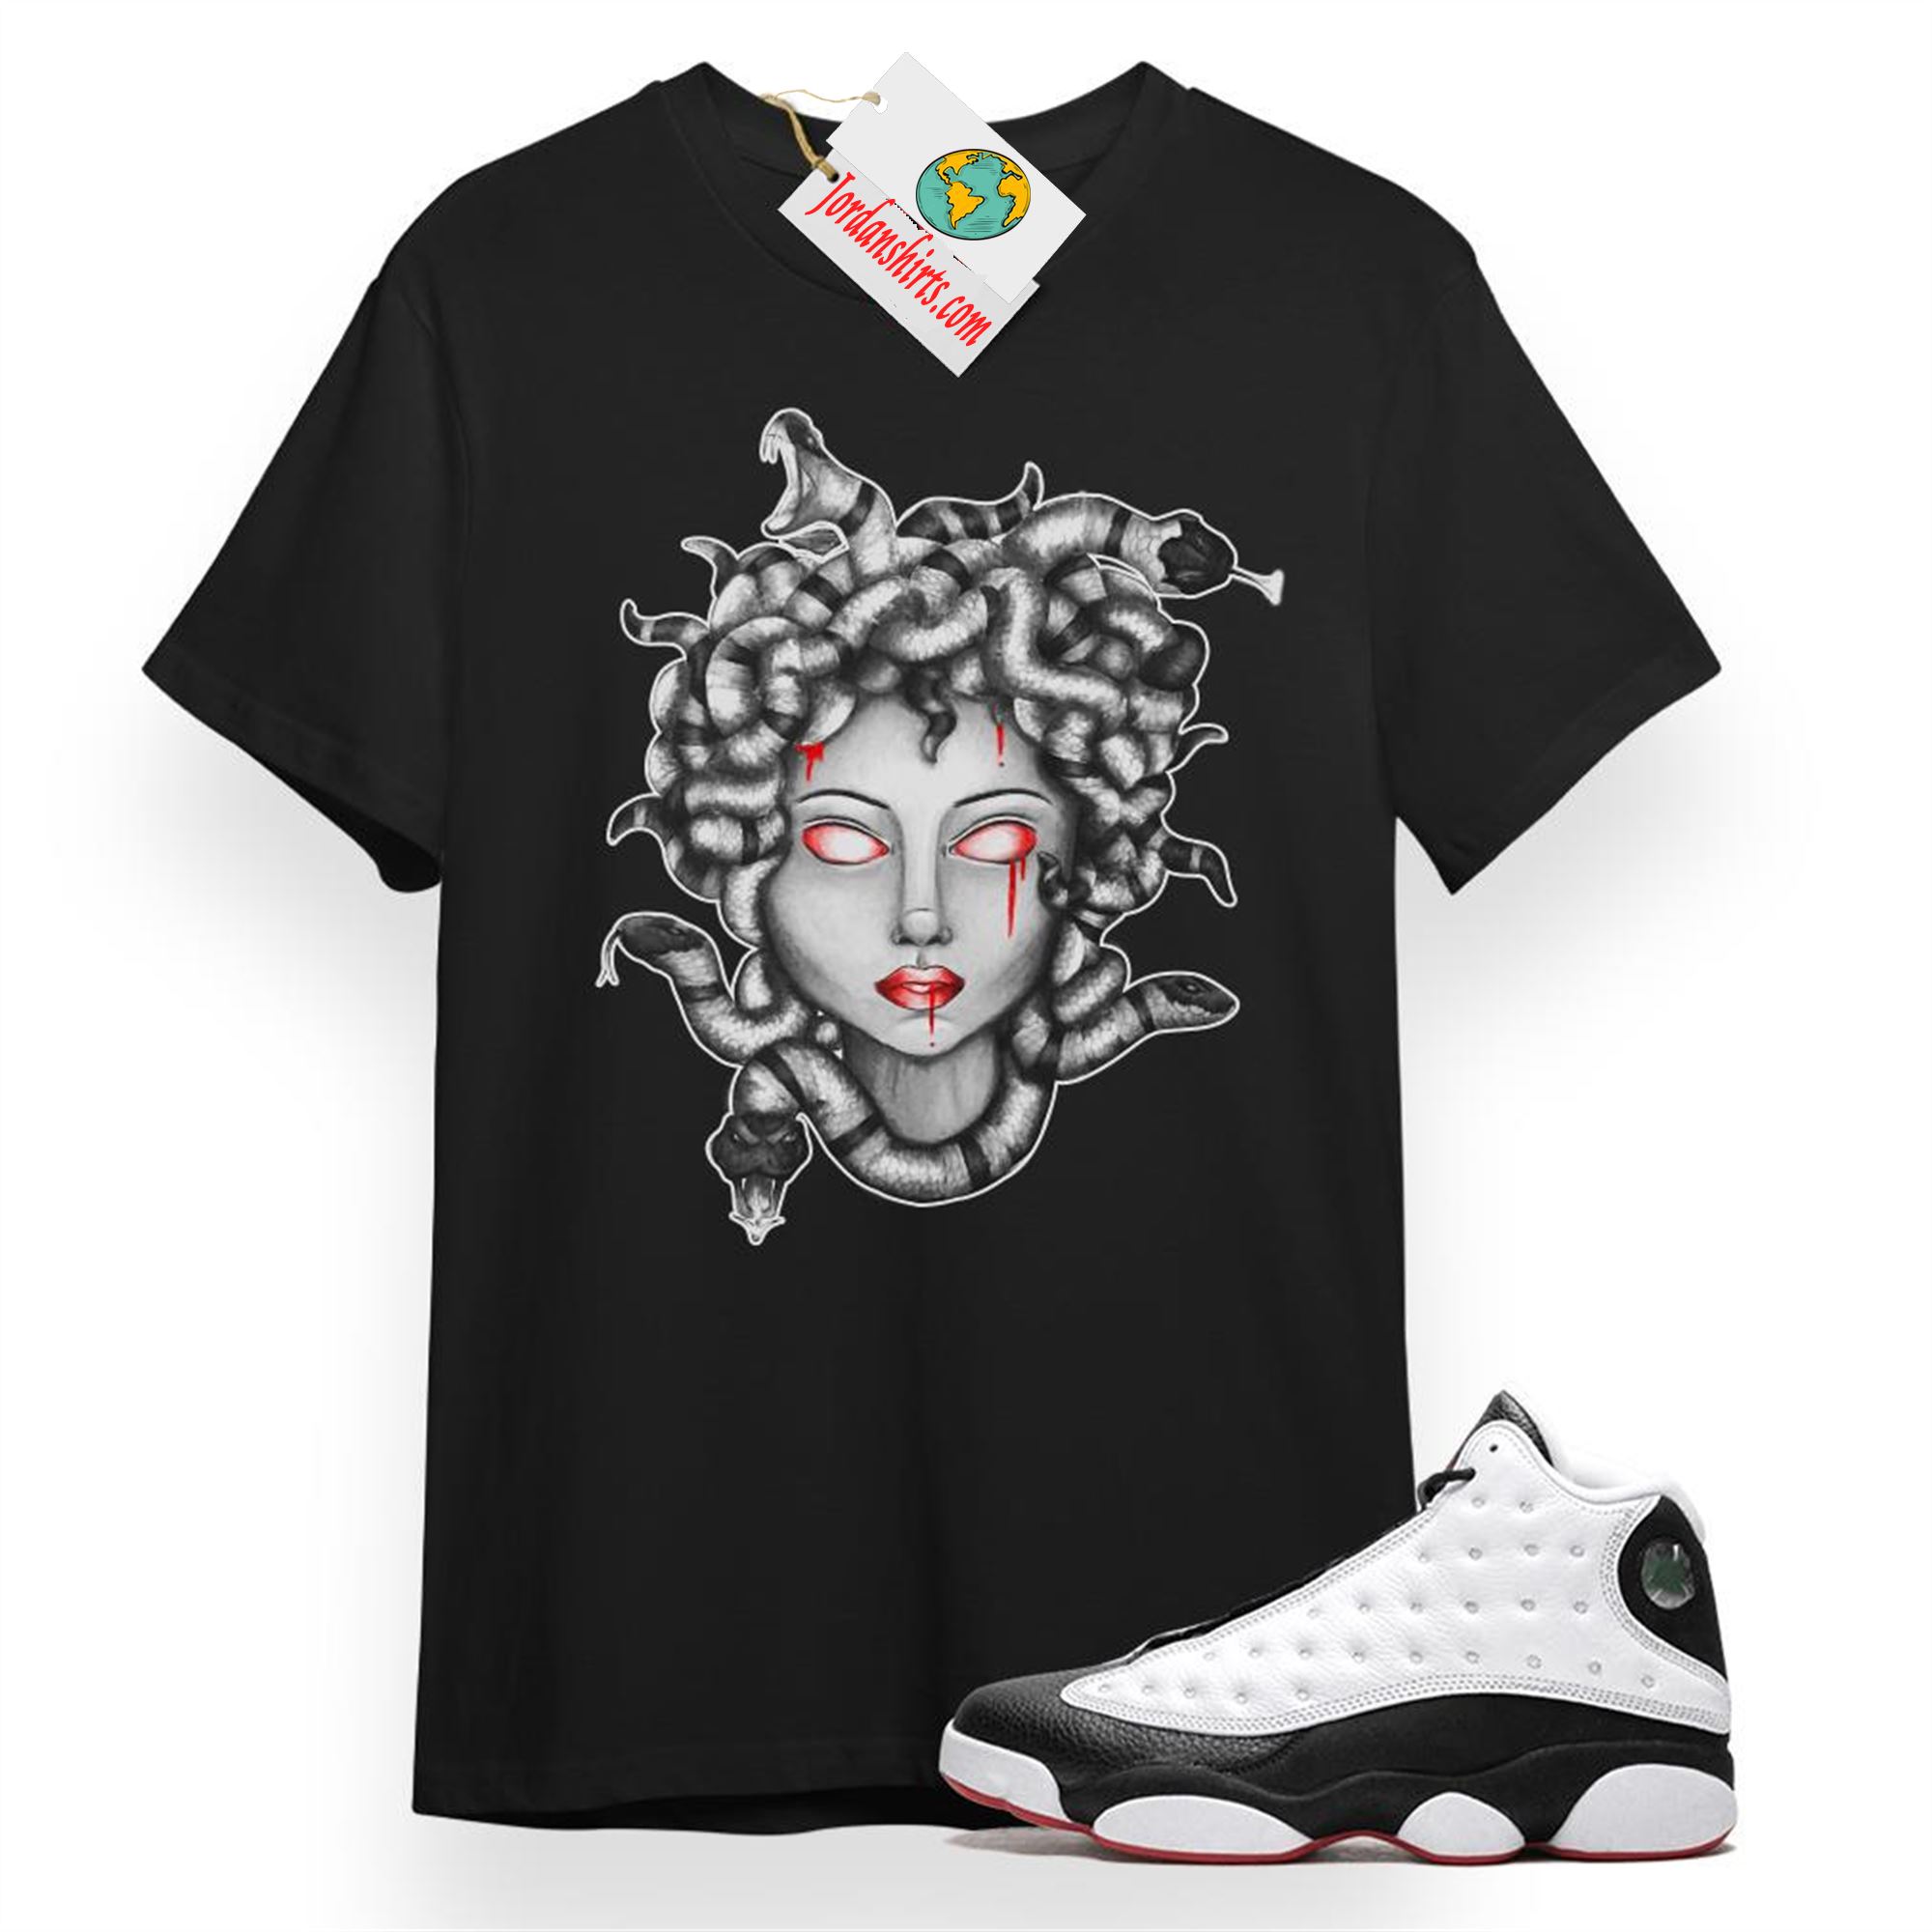 Jordan 13 Shirt, Medusa Snake Black T-shirt Air Jordan 13 He Got Game 13s Size Up To 5xl